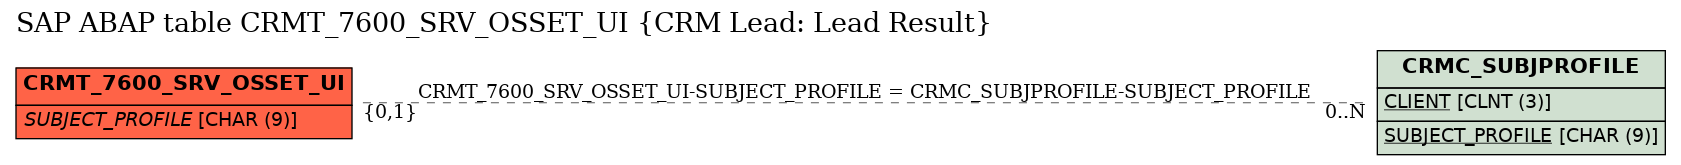 E-R Diagram for table CRMT_7600_SRV_OSSET_UI (CRM Lead: Lead Result)